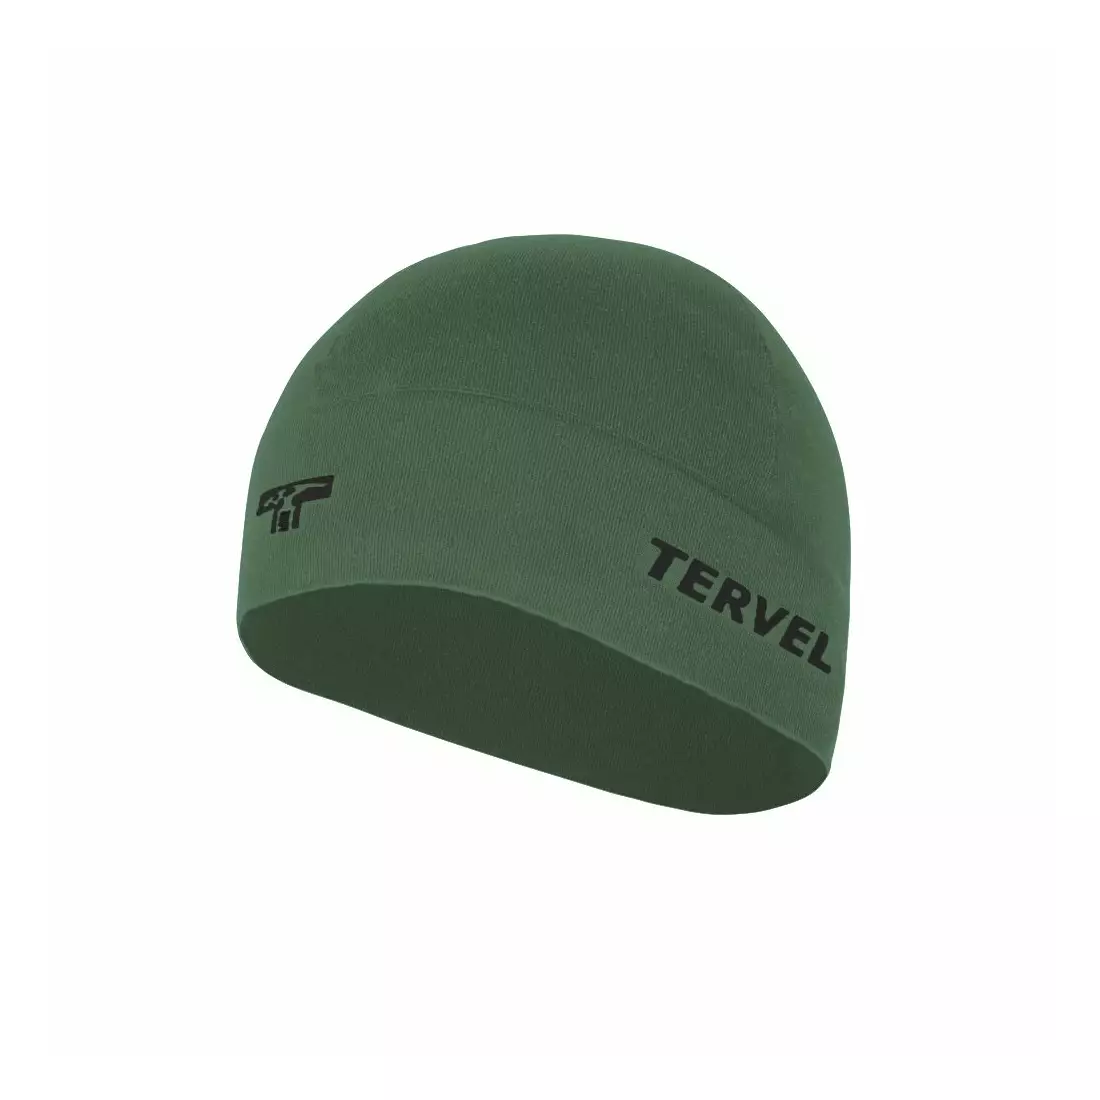 TERVEL 7001 - COMFORTLINE - training cap, color: Military, size: Universal